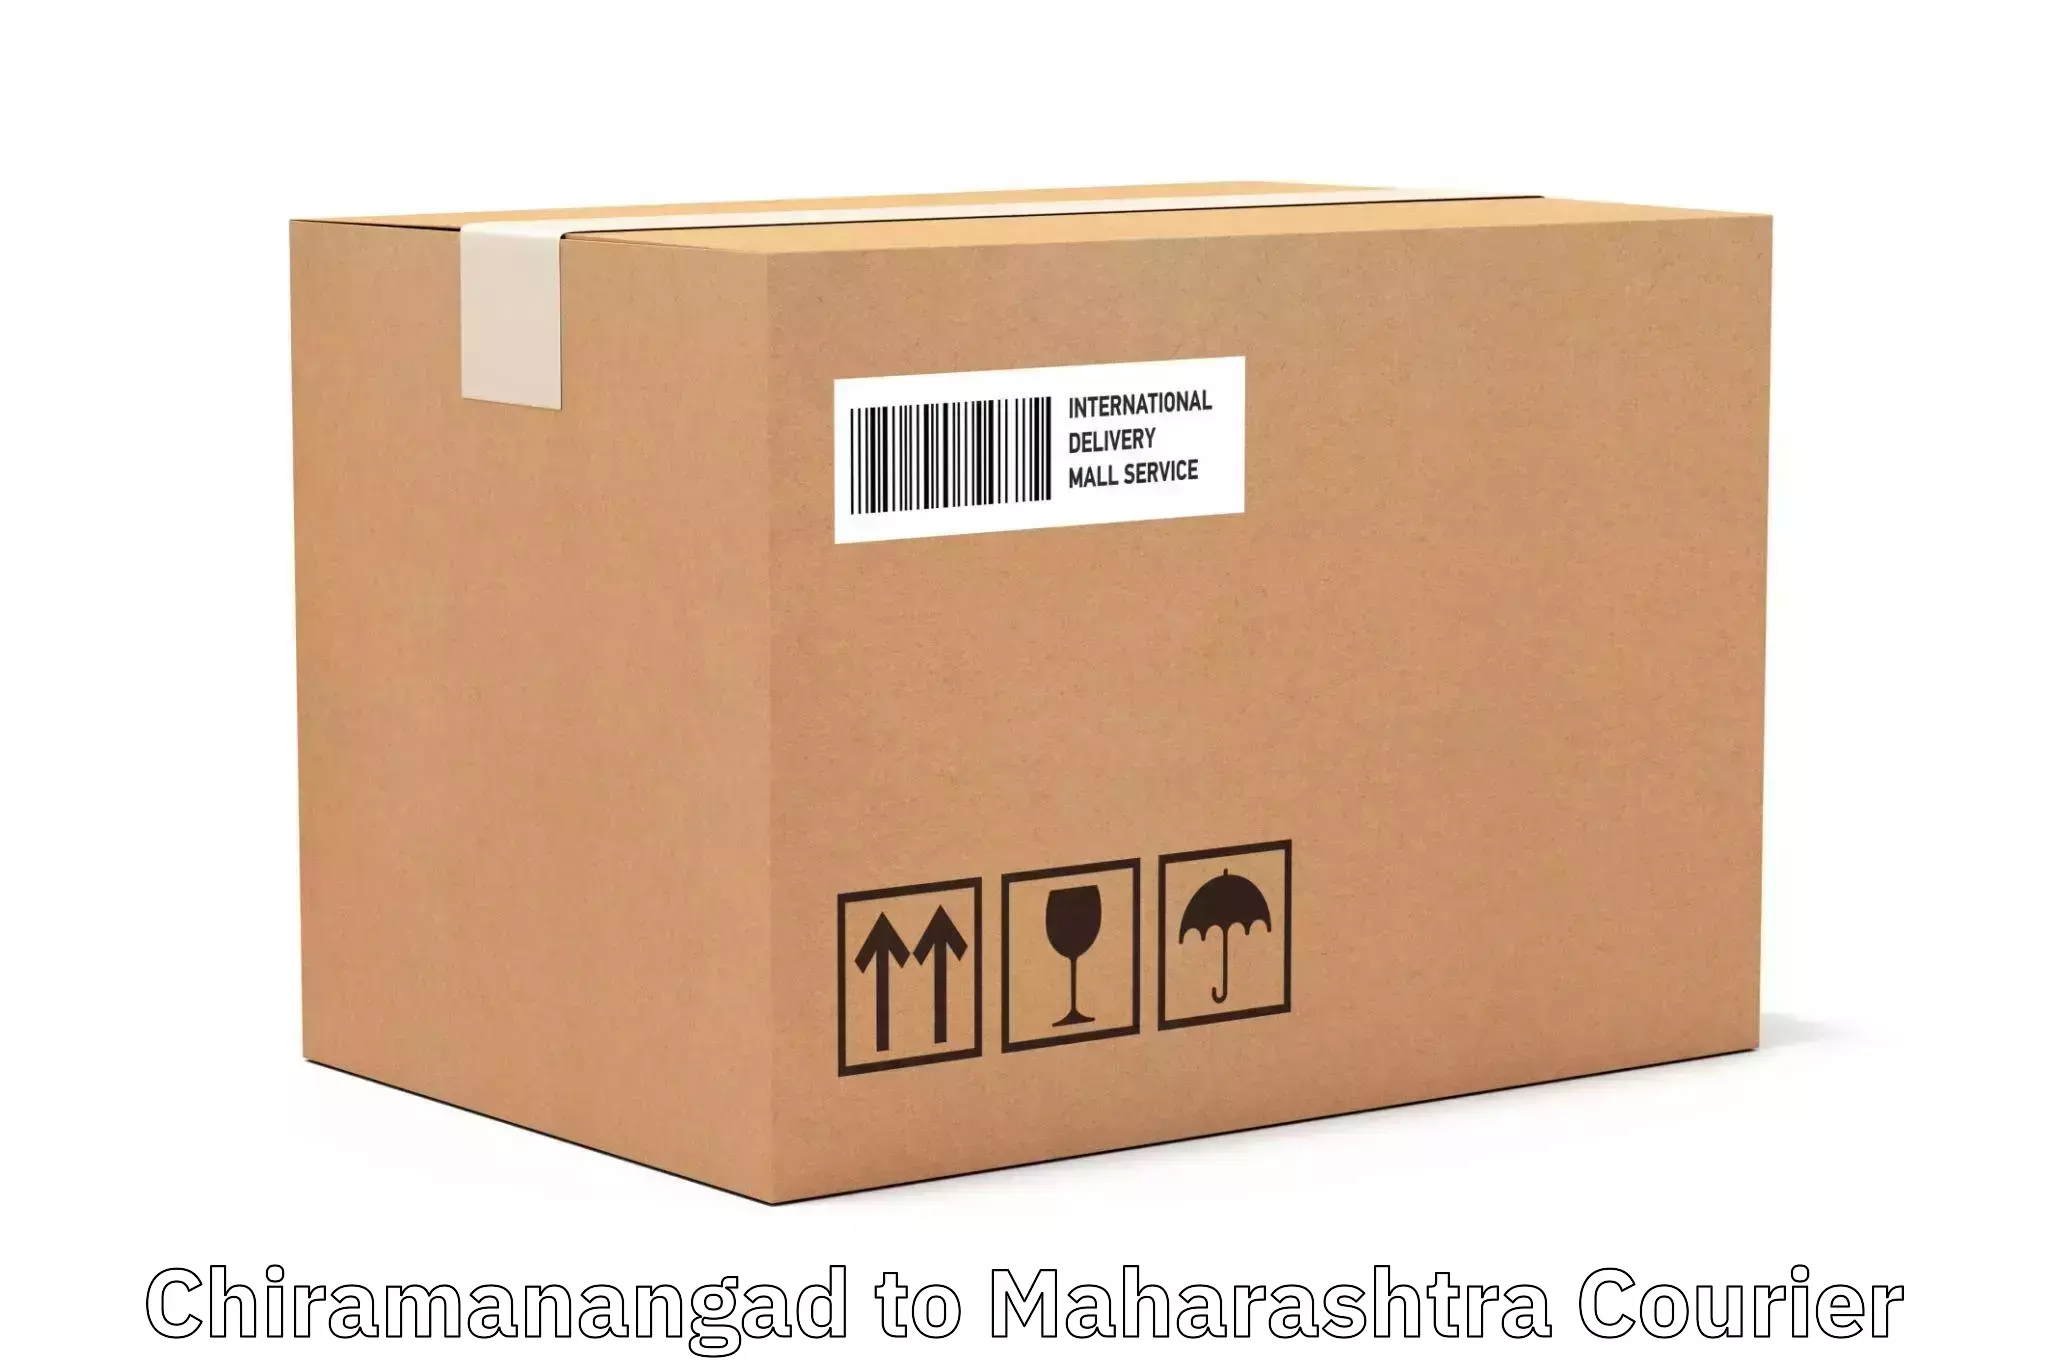 Customer-centric shipping Chiramanangad to Dindori Nashik